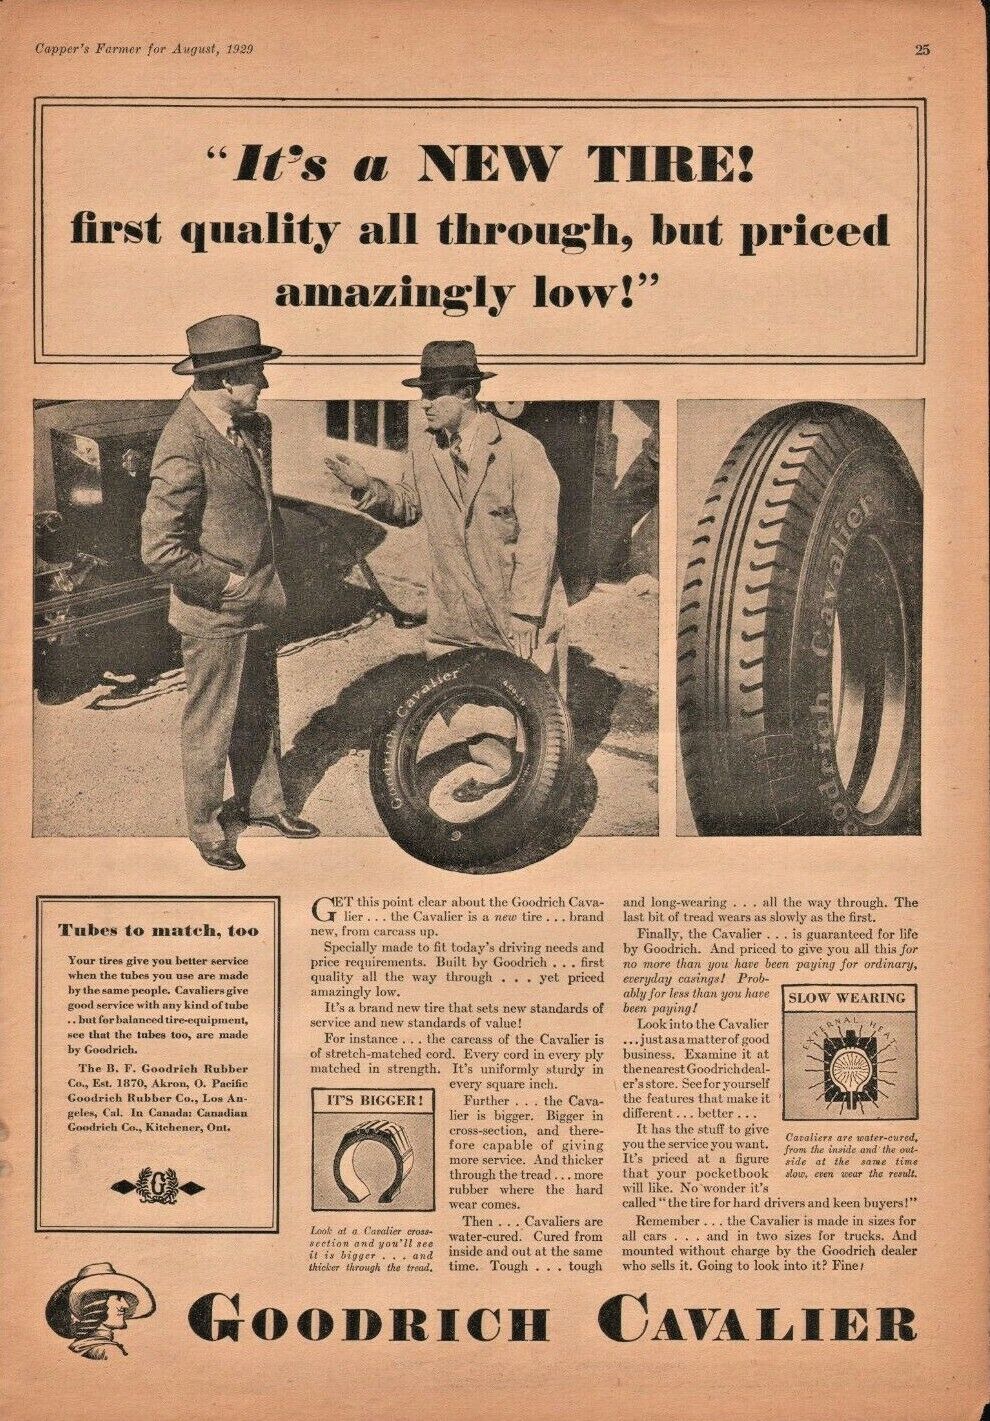 1929 Goodrich Cavalier Tire BF Goodrich Rubber Co Akron Ohio - Vintage Ad